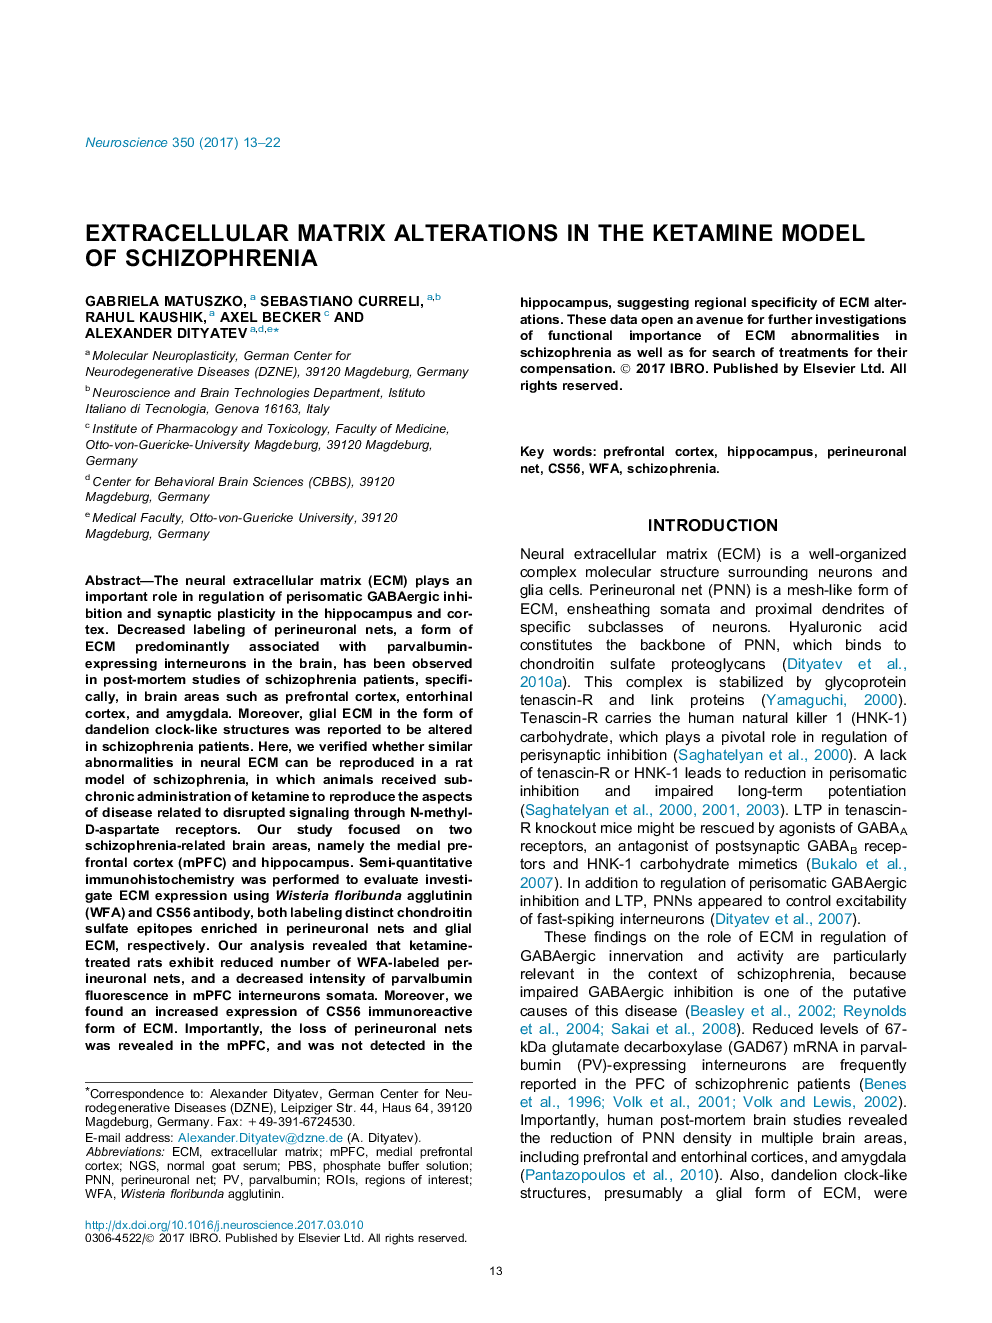 Extracellular matrix alterations in the ketamine model of schizophrenia